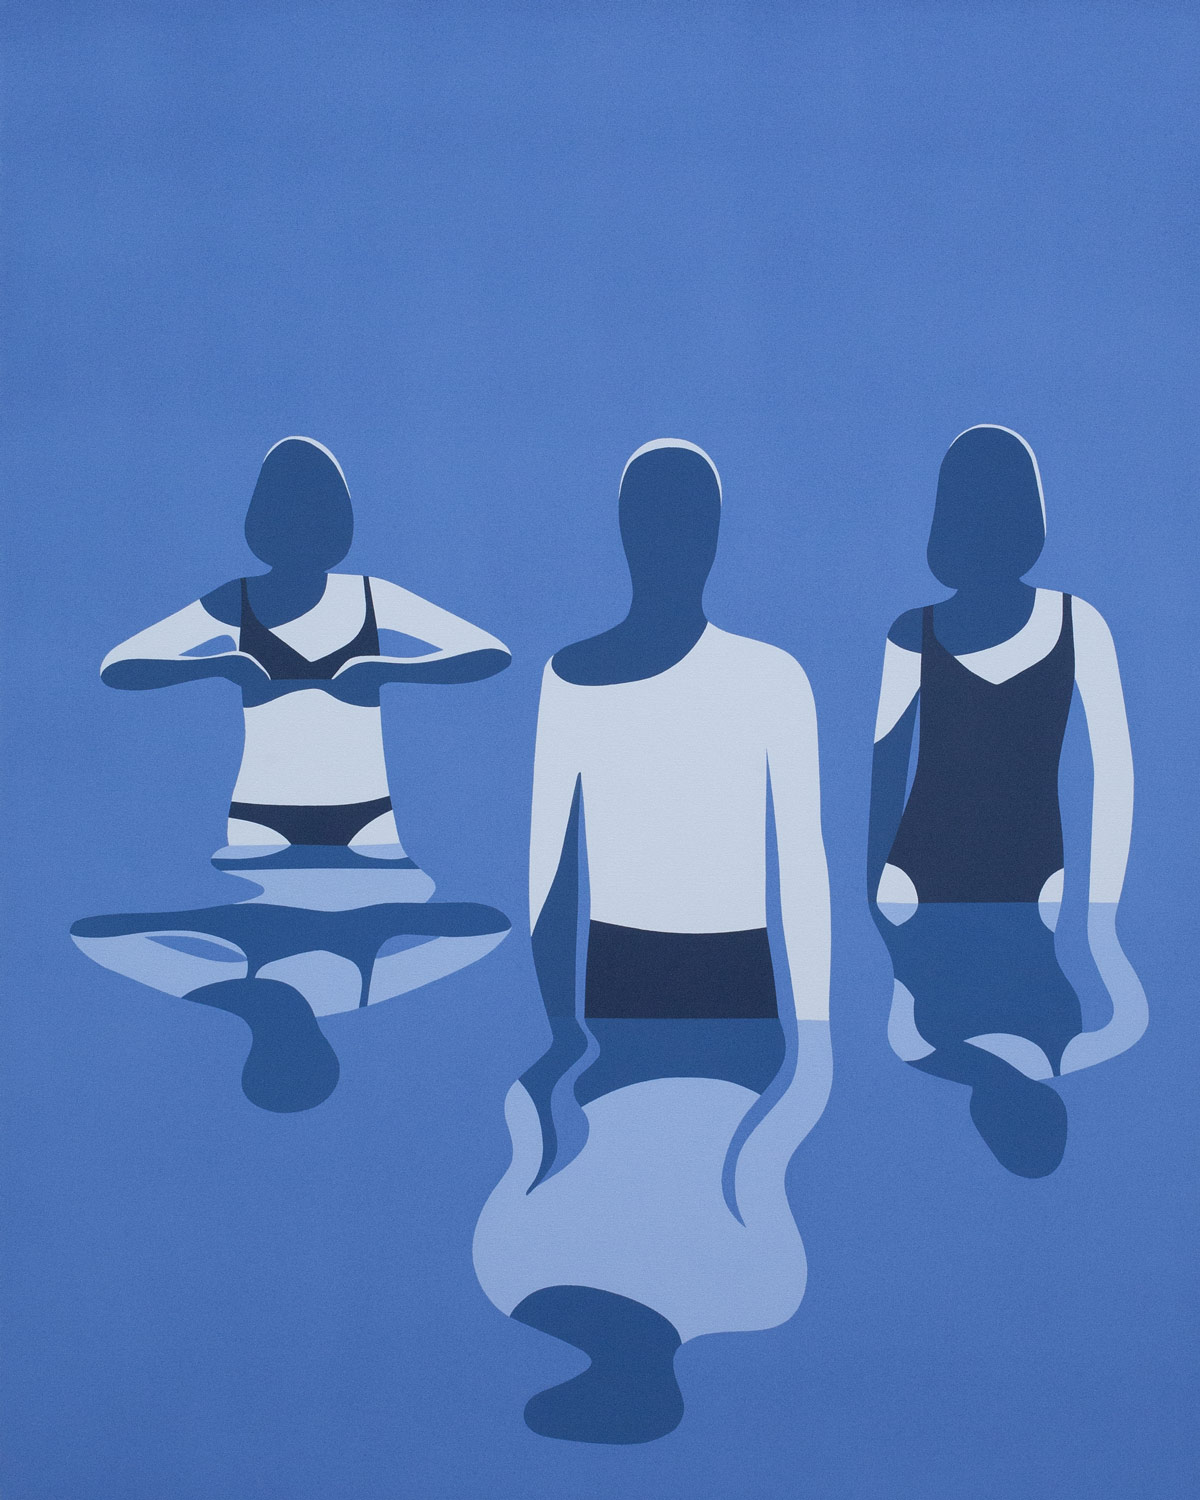 Bathers (at noon) by Geoff McFetridge